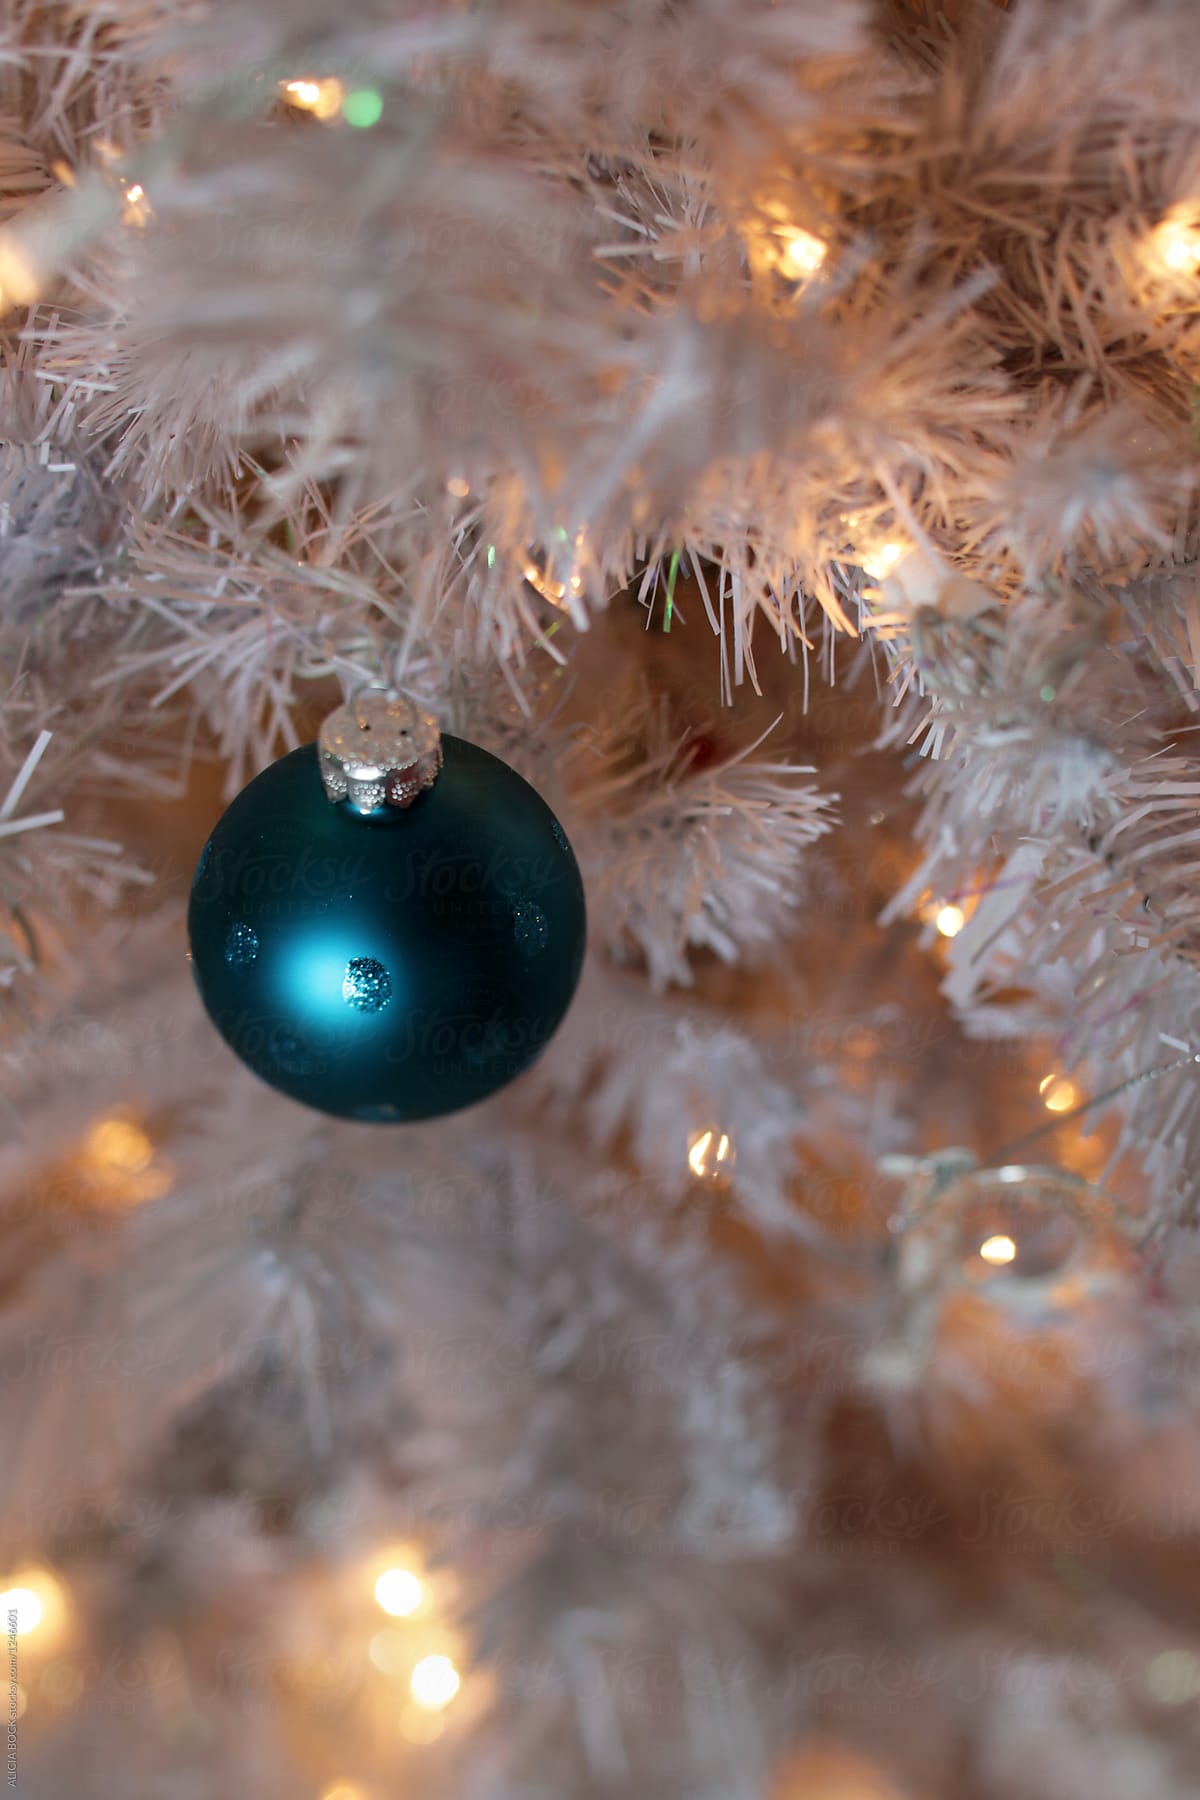 A Round Blue Christmas Ornament On A Vintage Christmas Tree